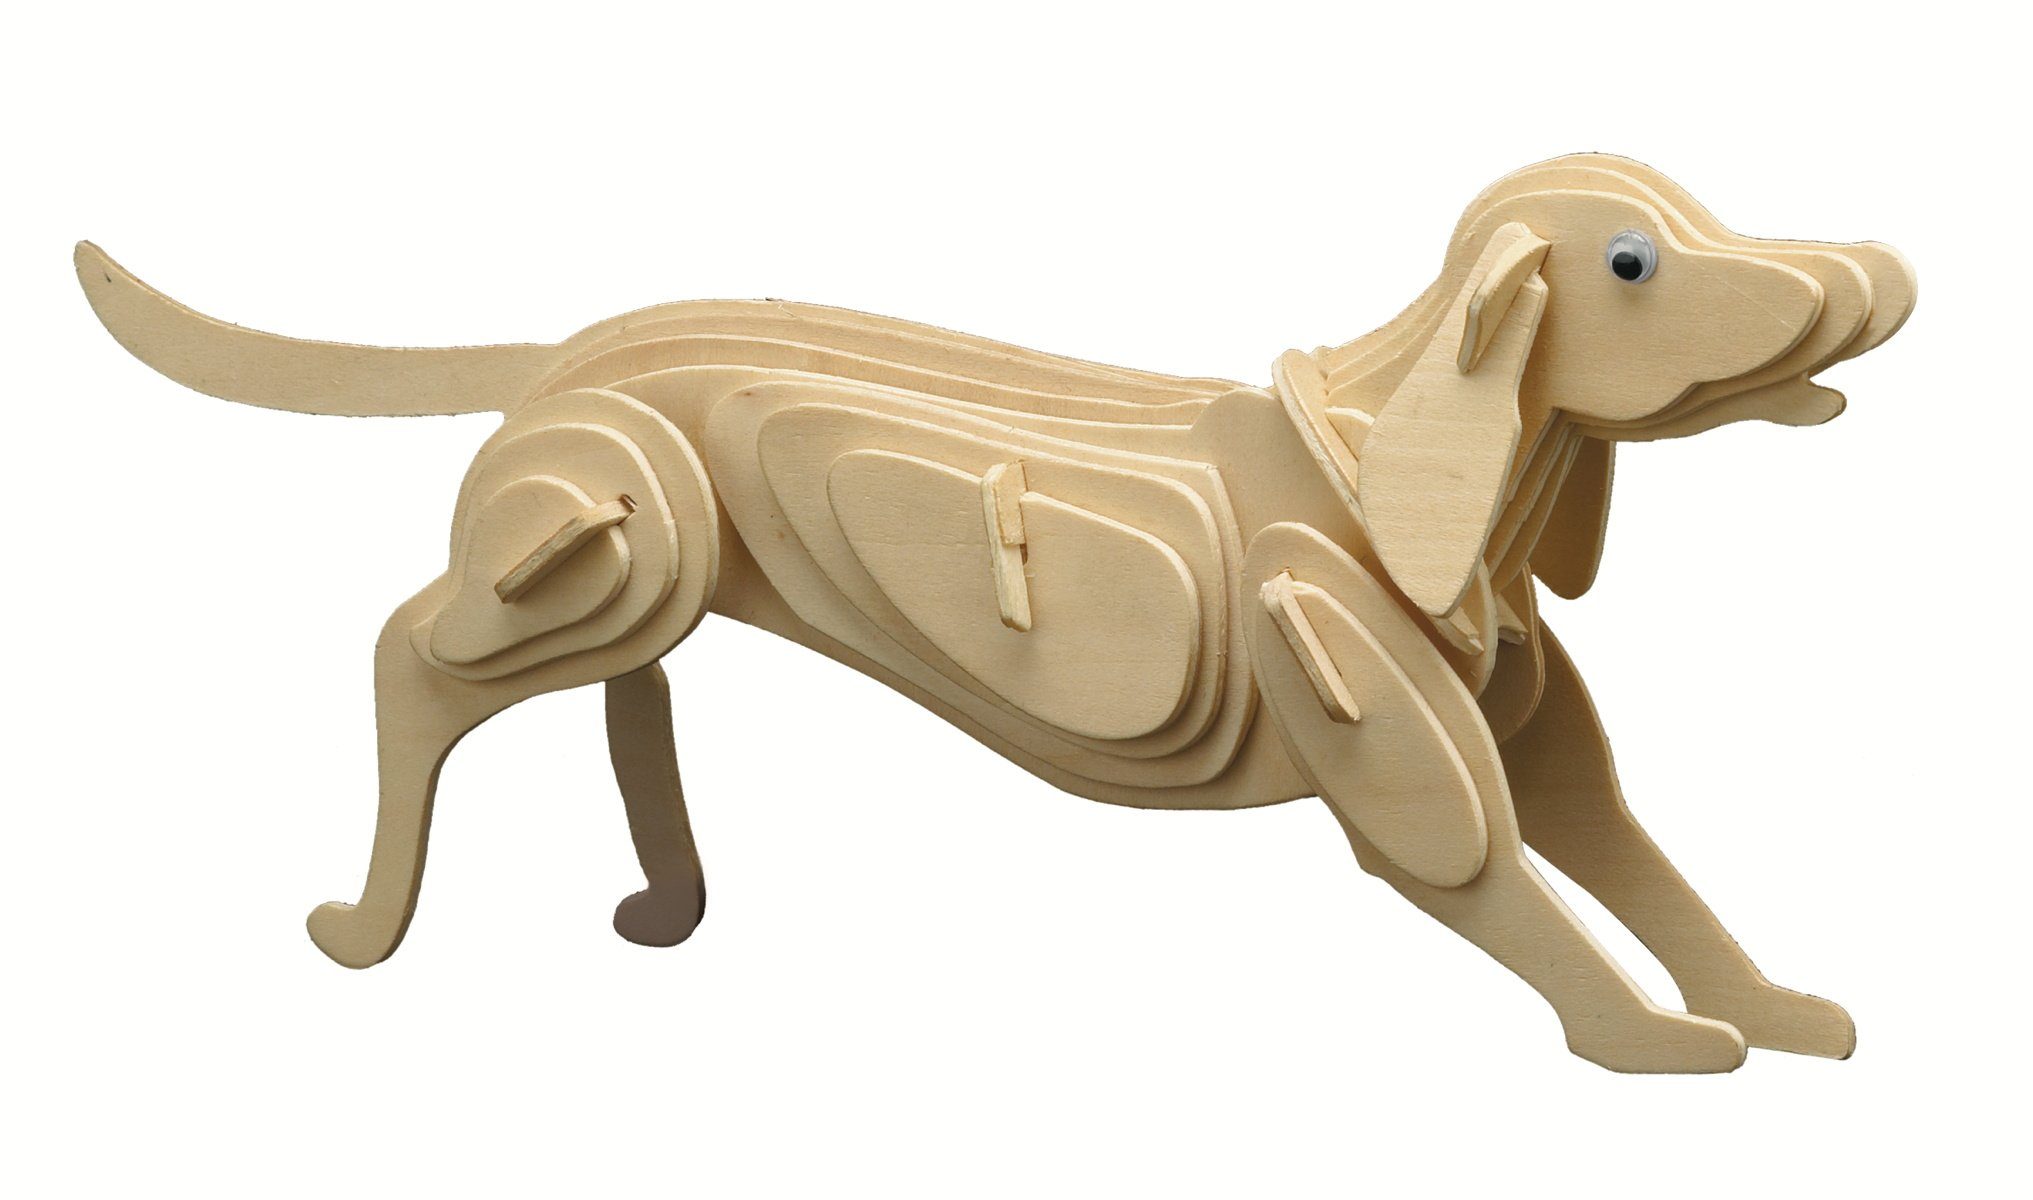 Pebaro 3D-Puzzle Holzbausatz Hund, 852/7, 37 Puzzleteile